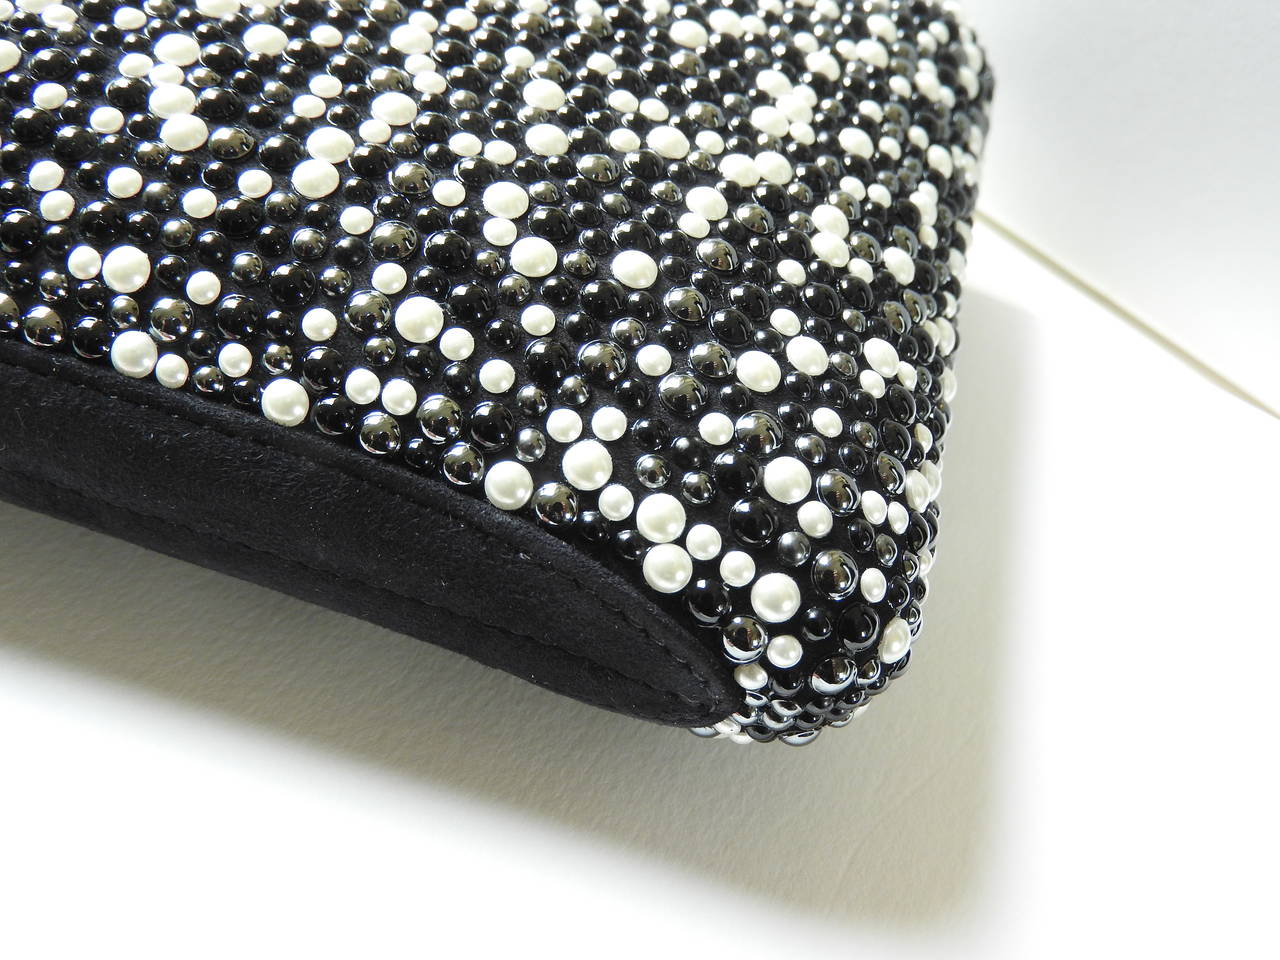 Chanel 2014 Bijoux Jewelled Minaudière Pearl Clutch Bag For Sale 6